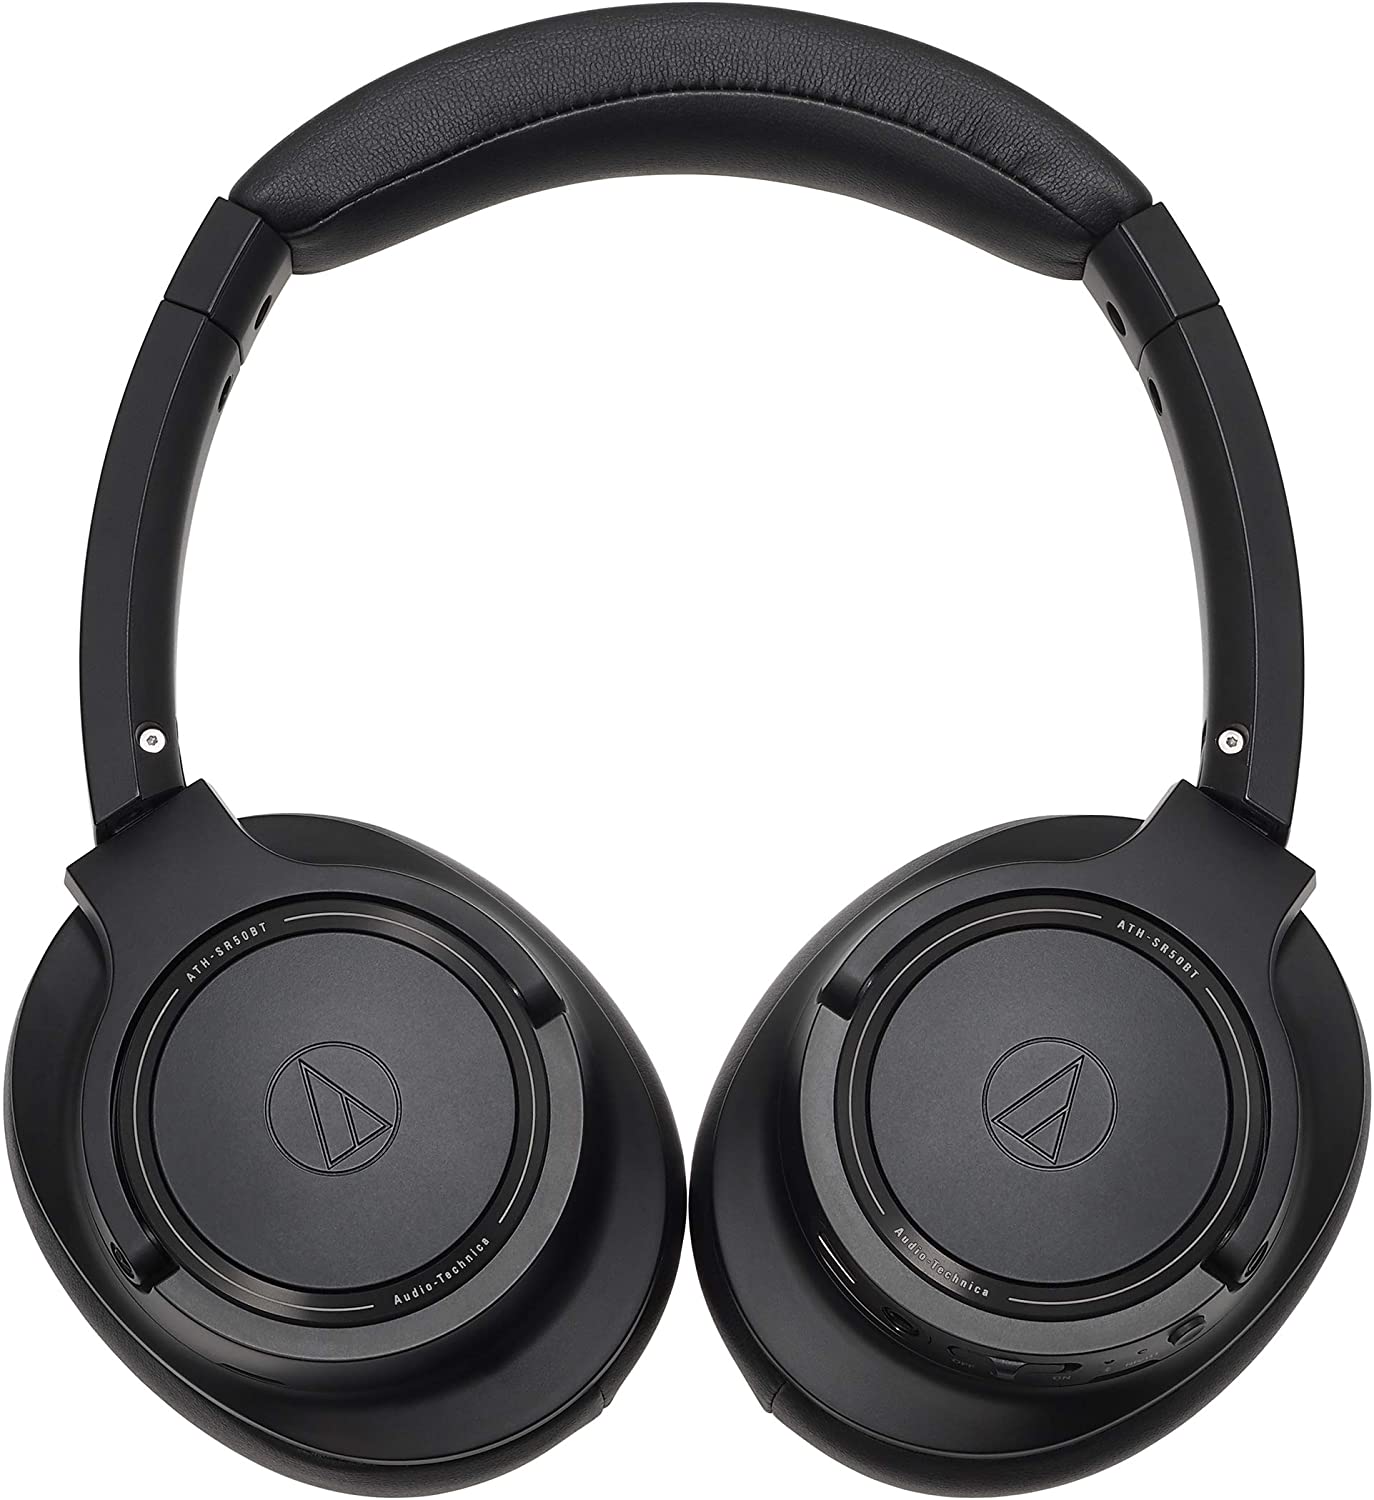 ATH-SR50BTBK - Wireless Over-Ear Headphones